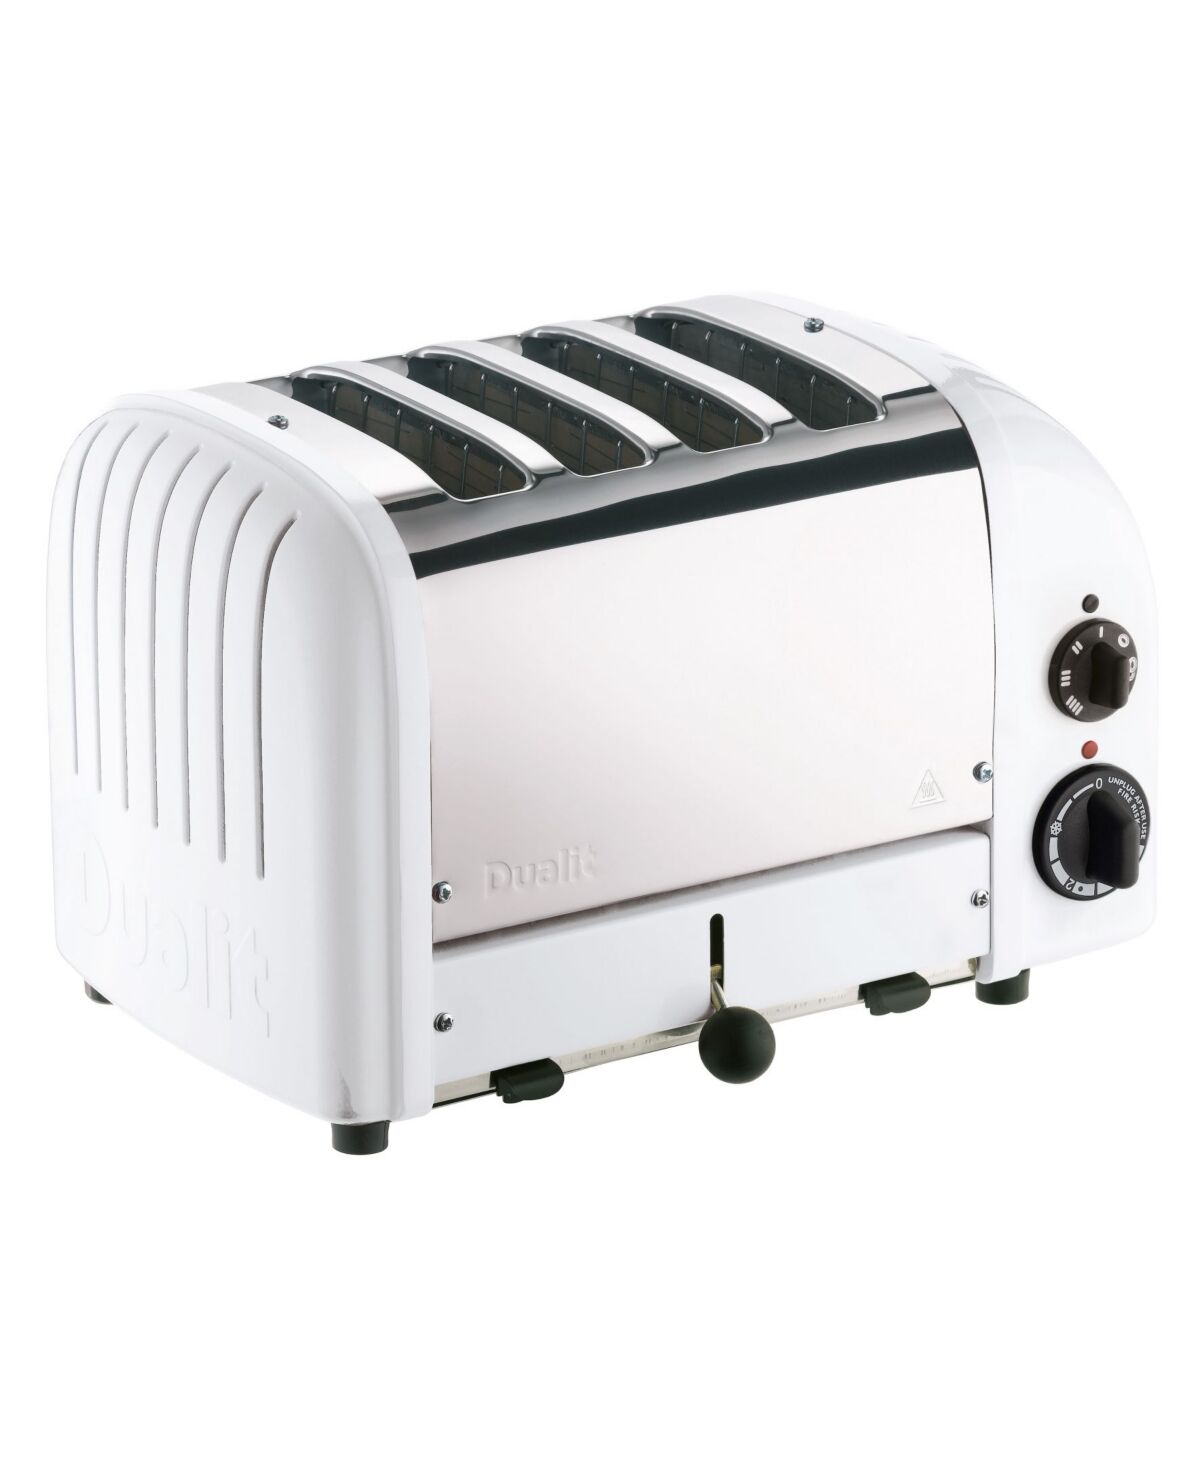 Dualit 4 Slice NewGen Toaster - White